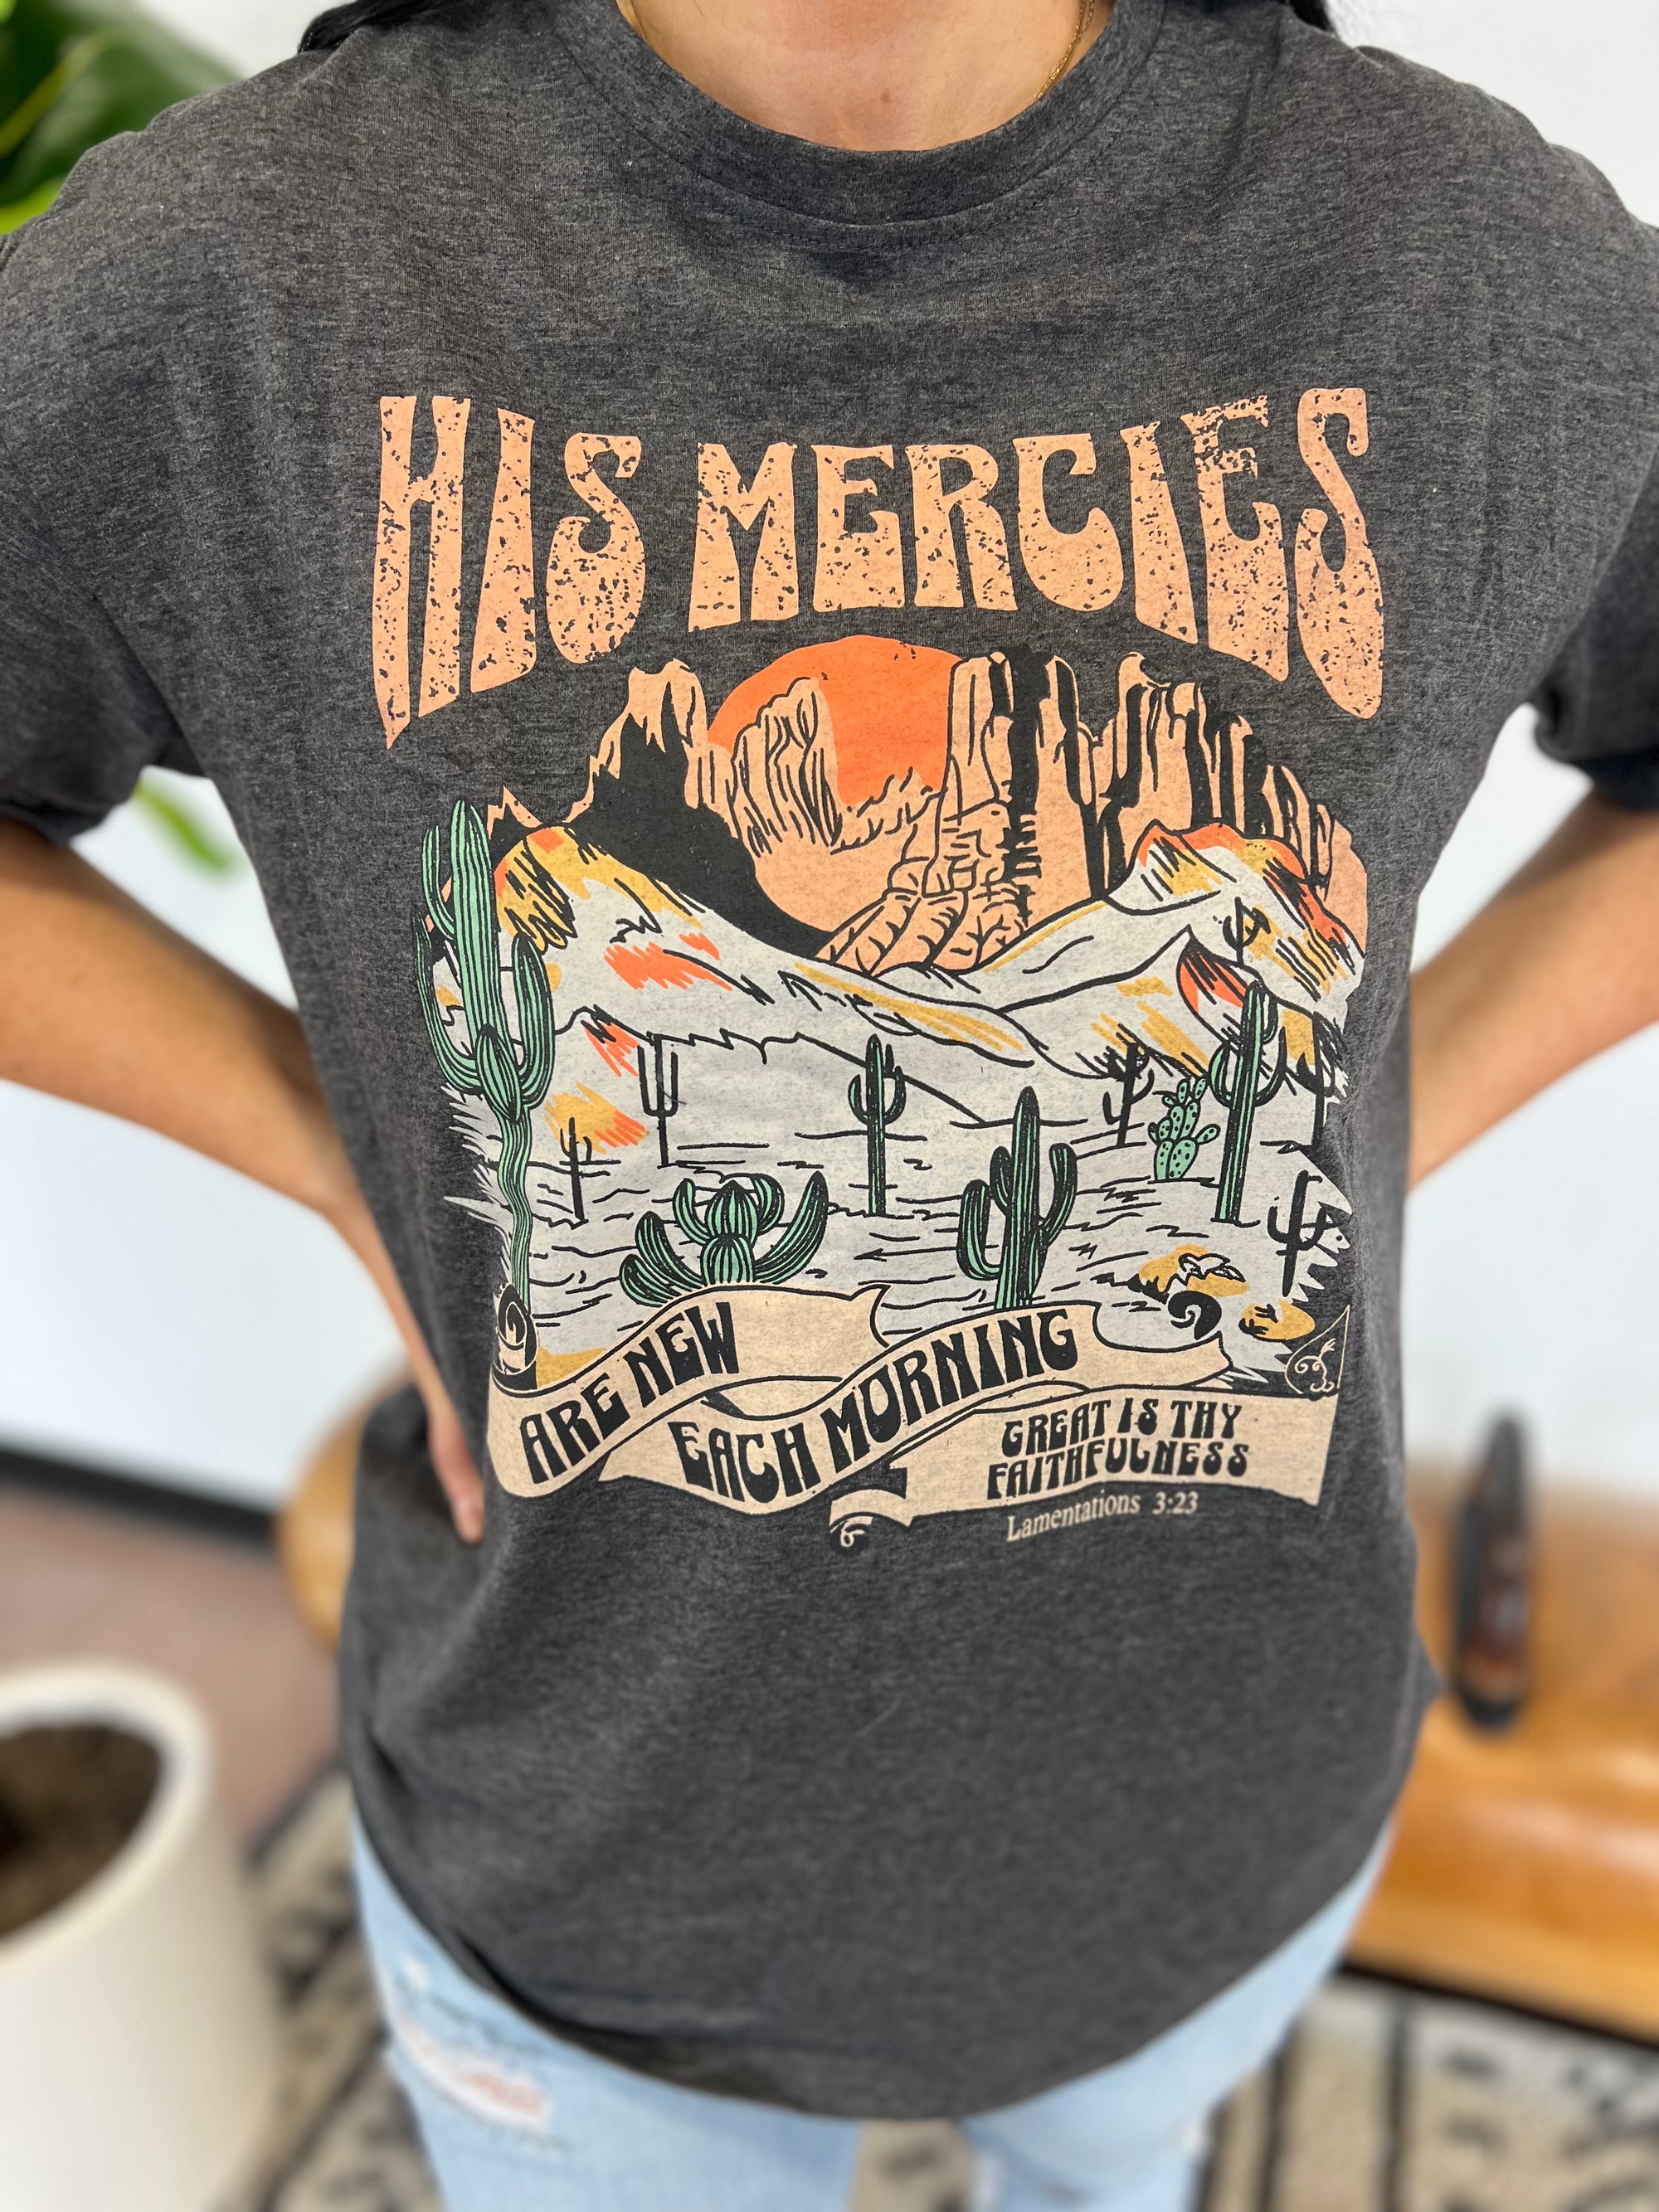 The "His Mercies" Graphic Tee